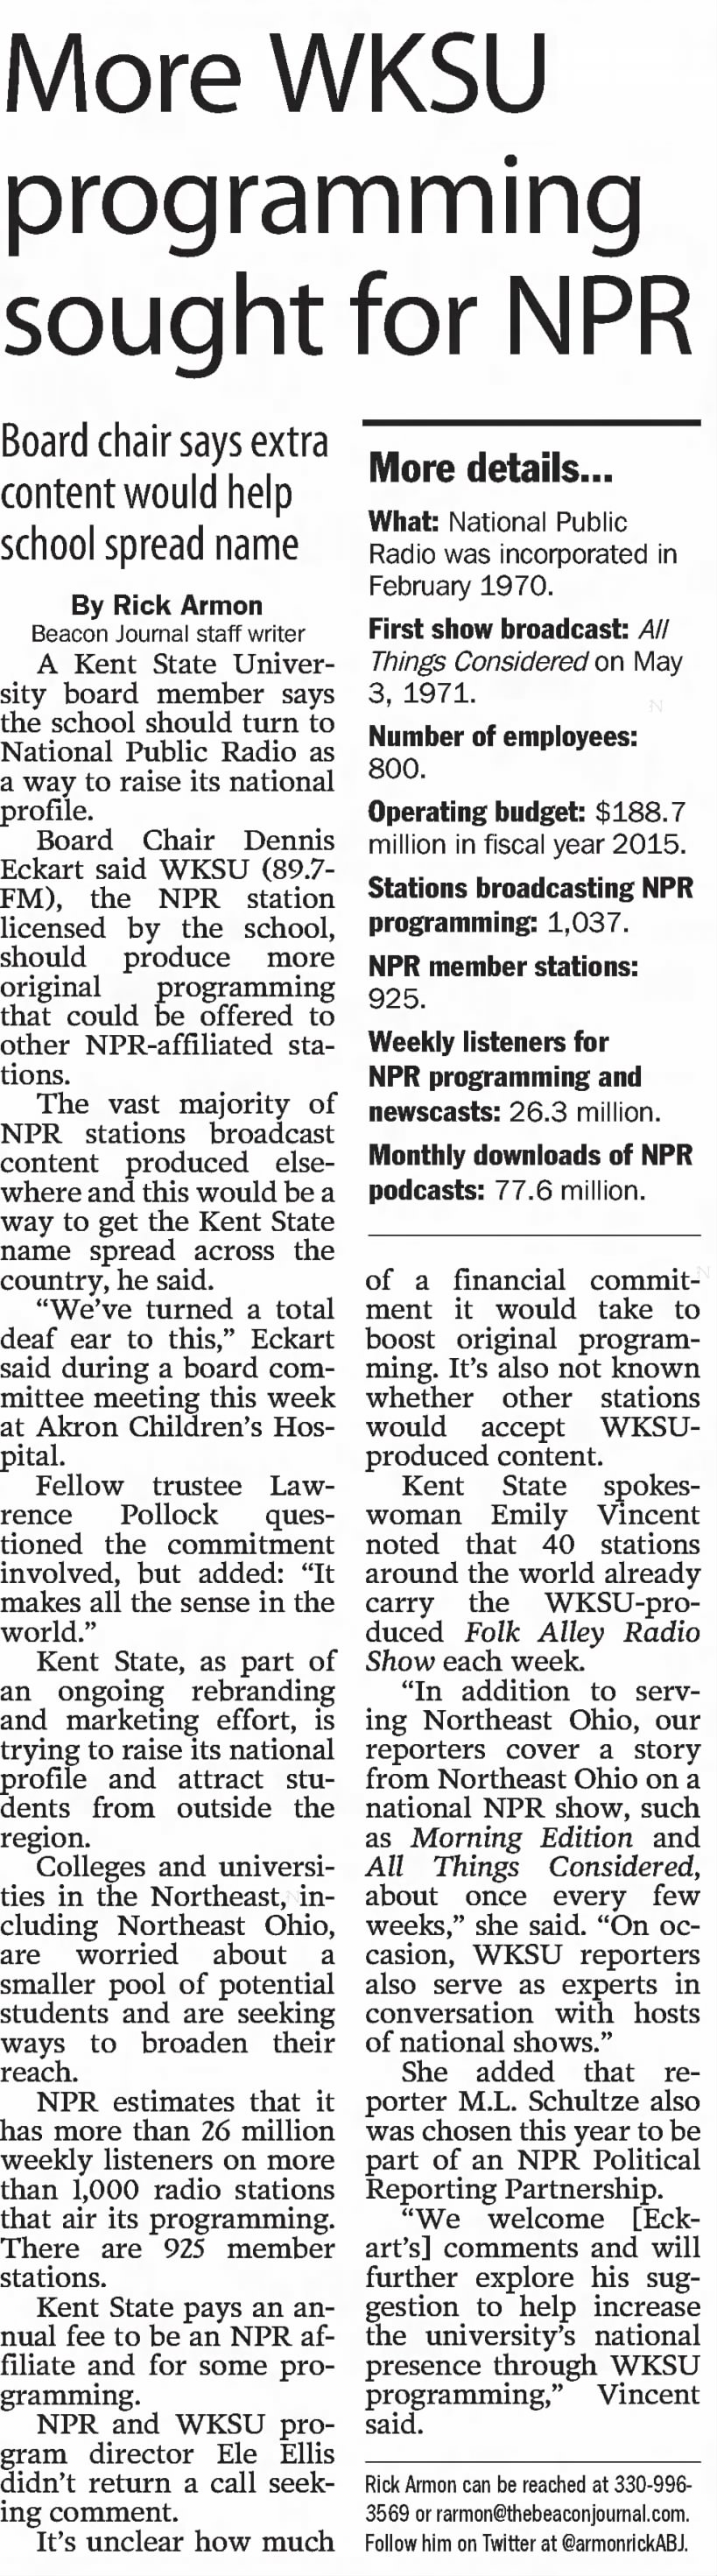 More WKSU programming sought for NPR